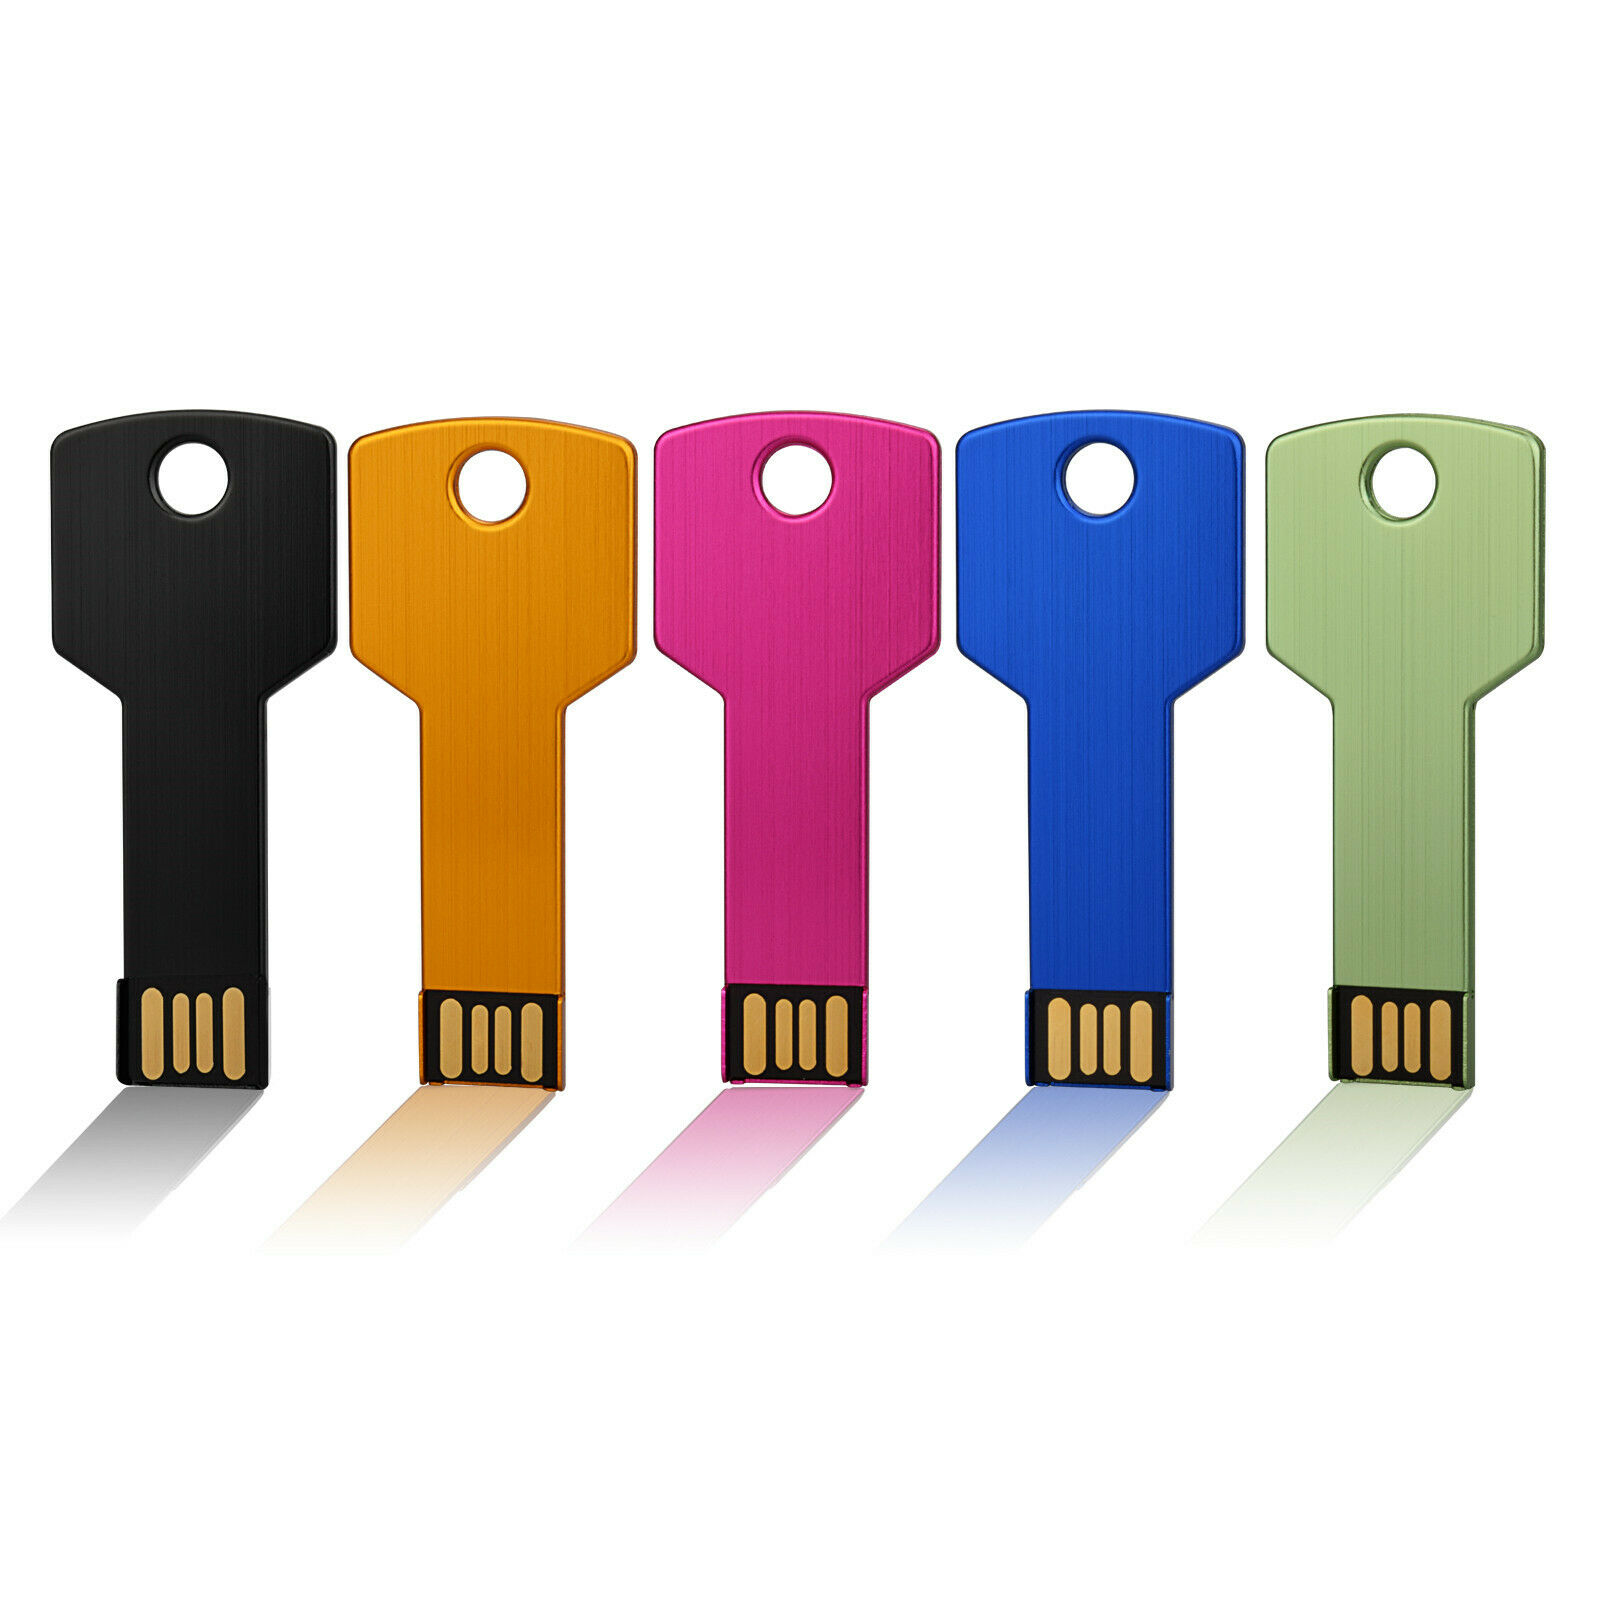 10 Pack USB Flash Drives 4GB Metal Thumb Drive Key Shape Jump Drive Memory Stick Kootion Does Not Apply - фотография #11